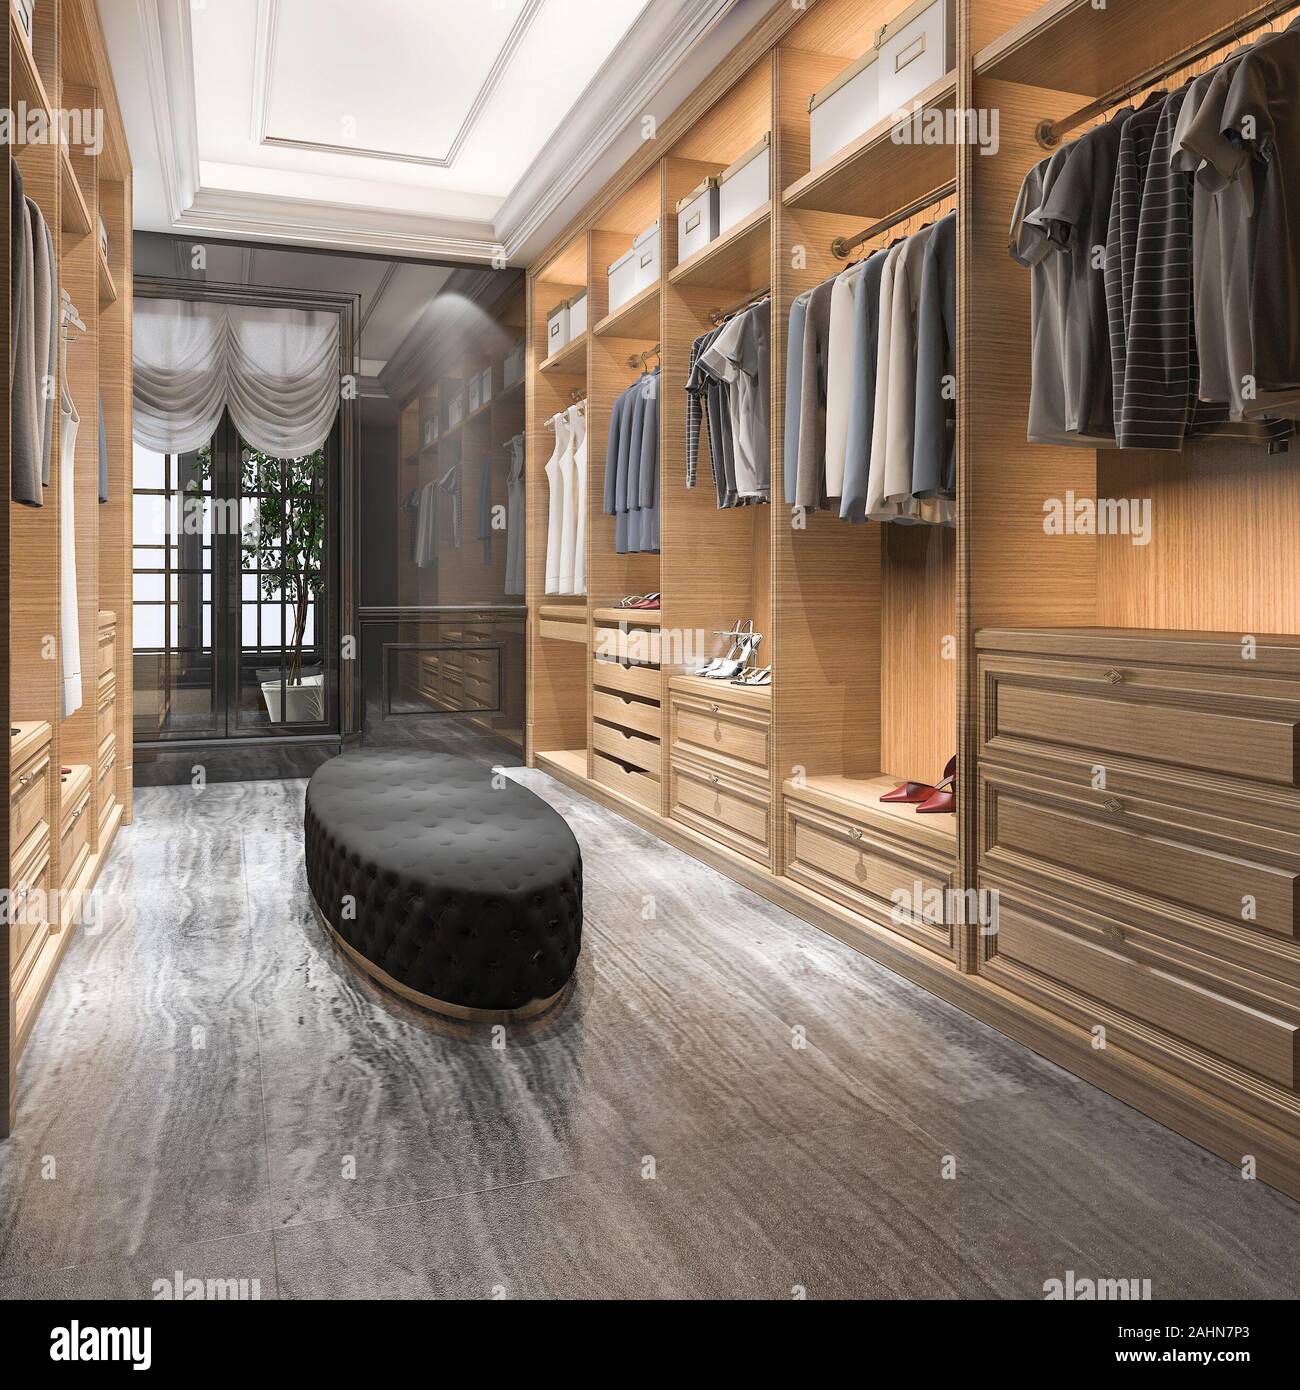 interior of modern luxury wardrobe Stock Photo - Alamy